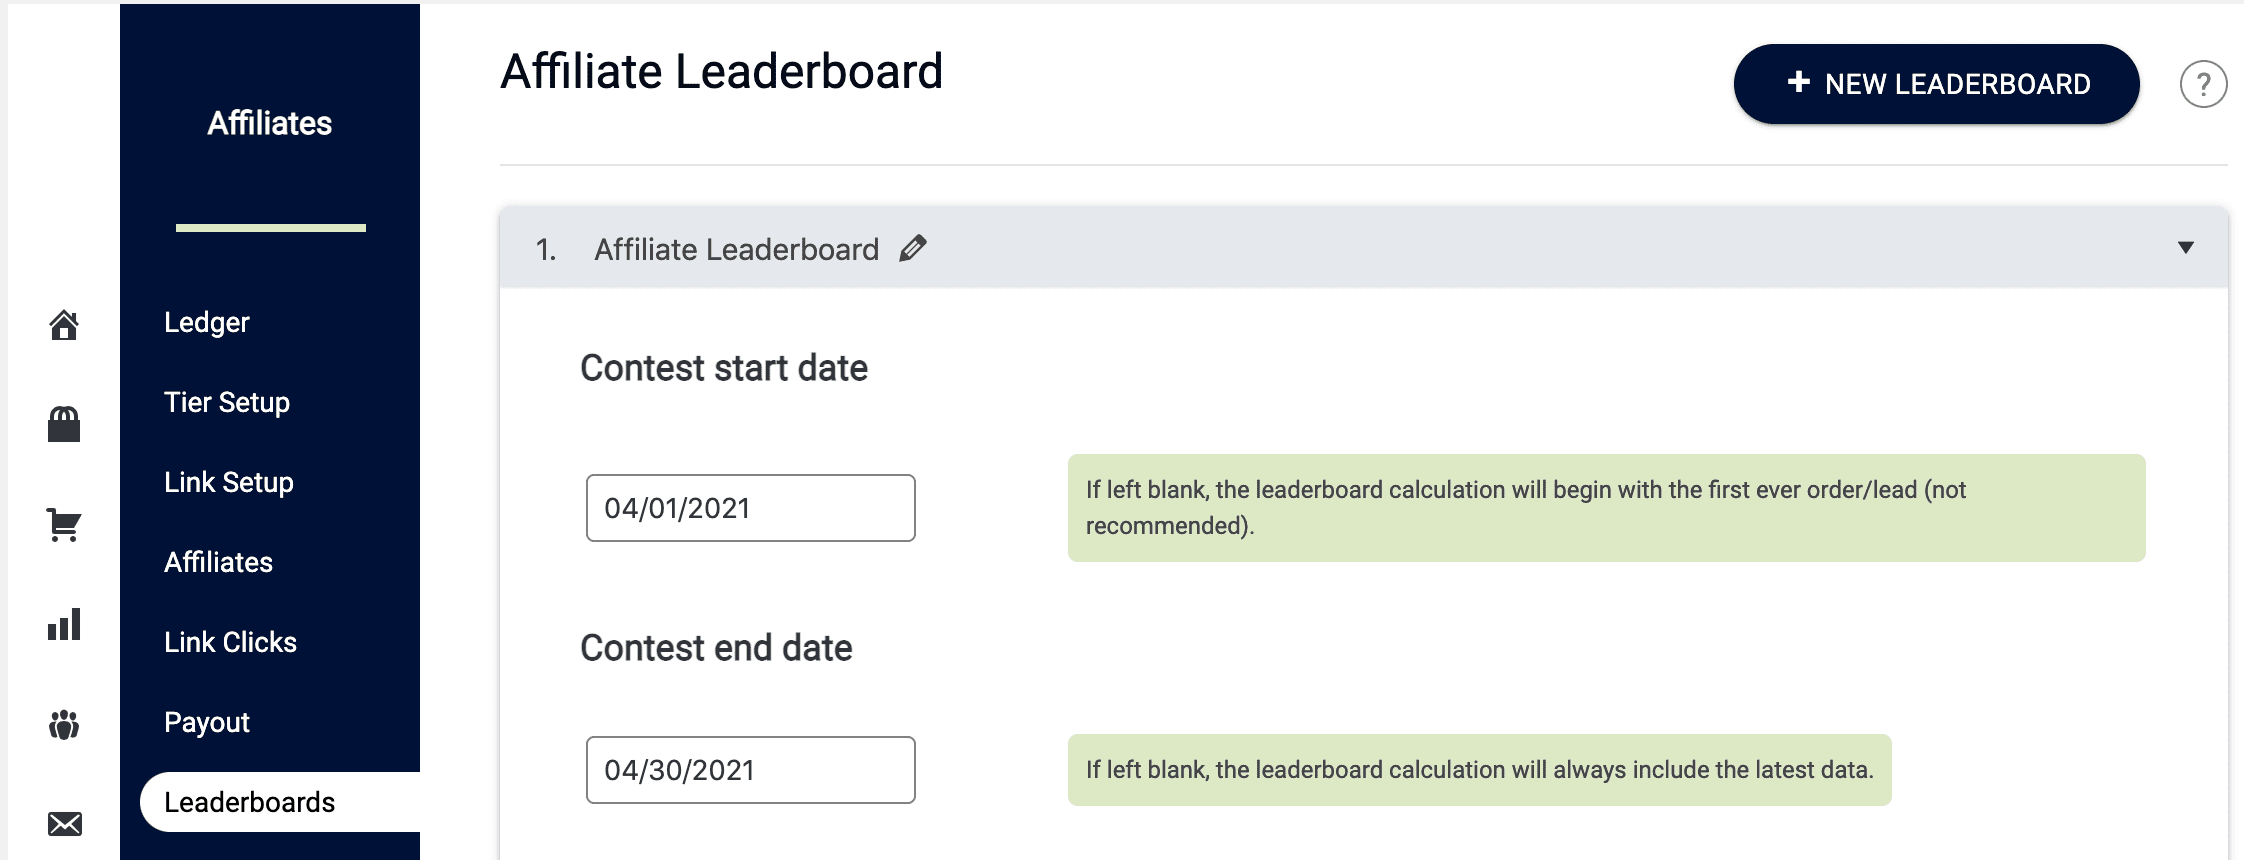 affiliate leaderboard dates